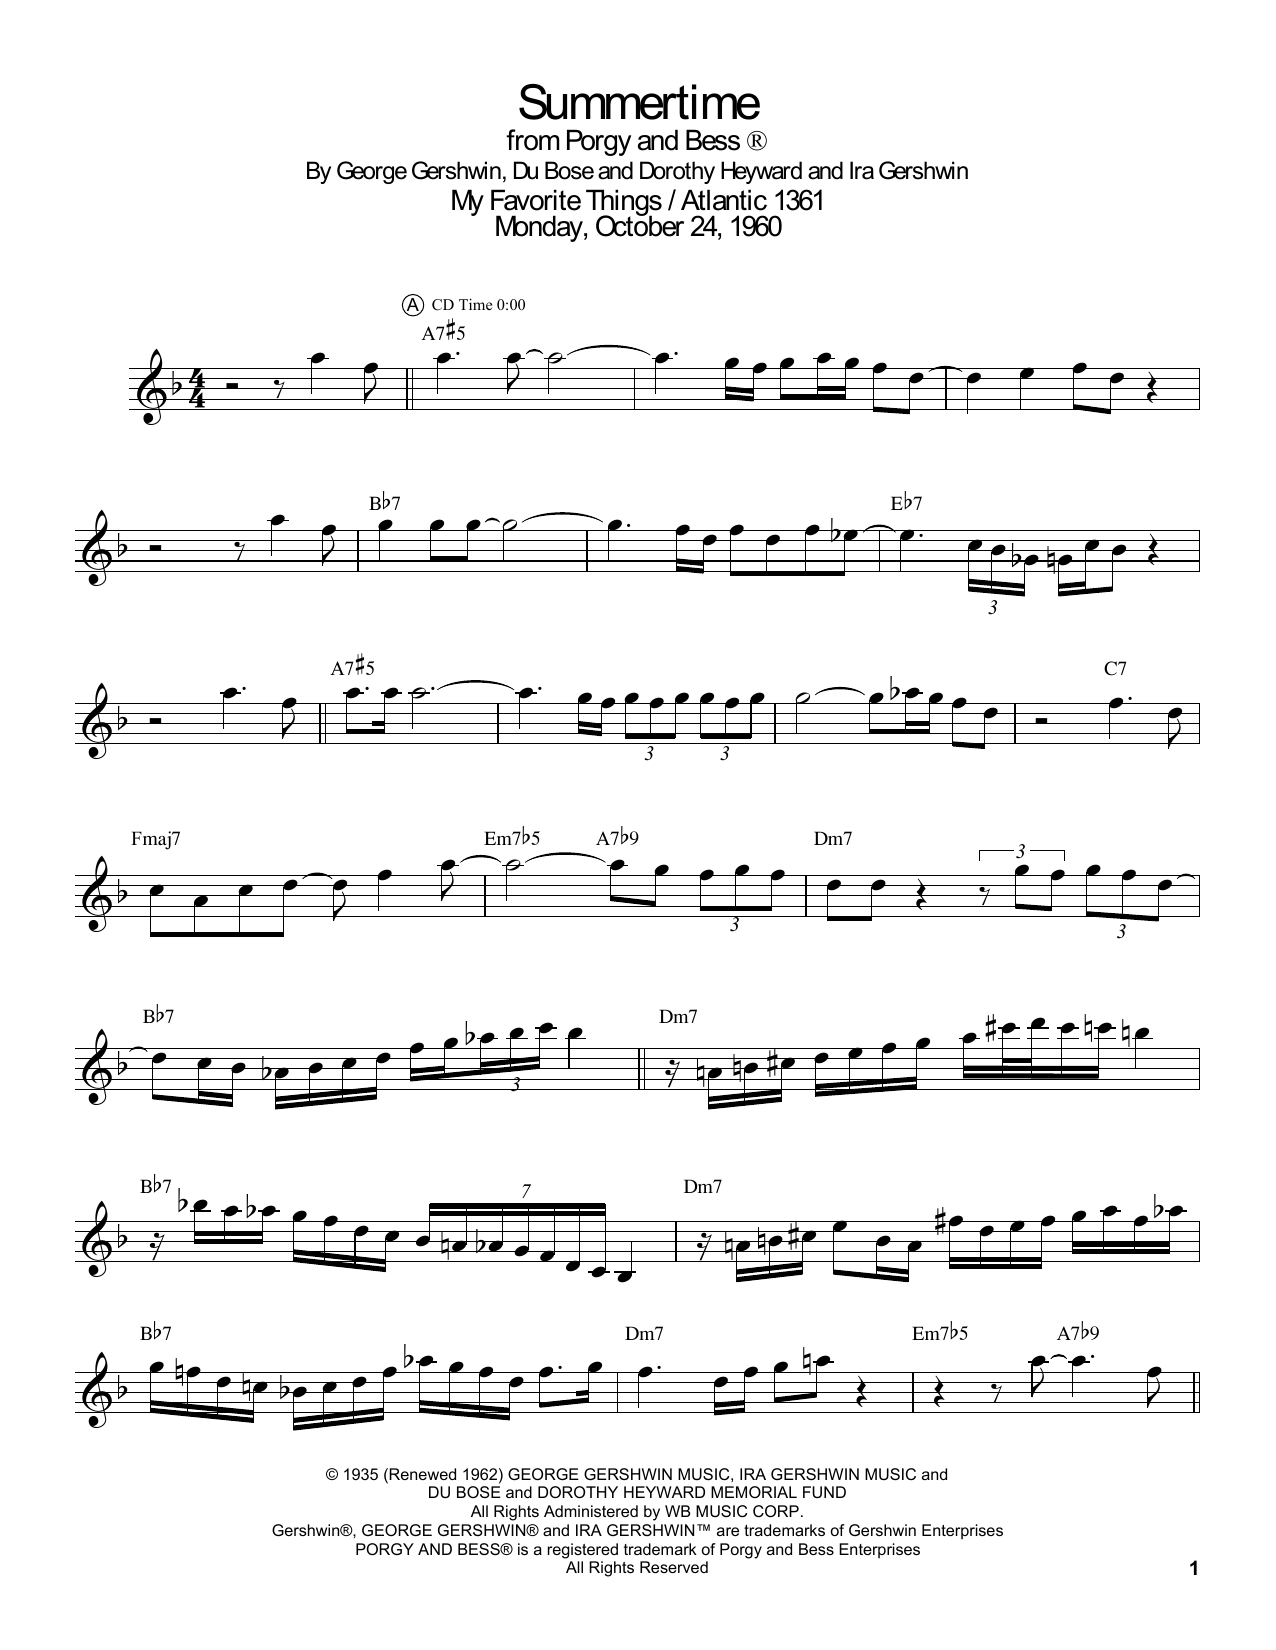 John Coltrane Summertime Sheet Music Notes & Chords for Tenor Sax Transcription - Download or Print PDF